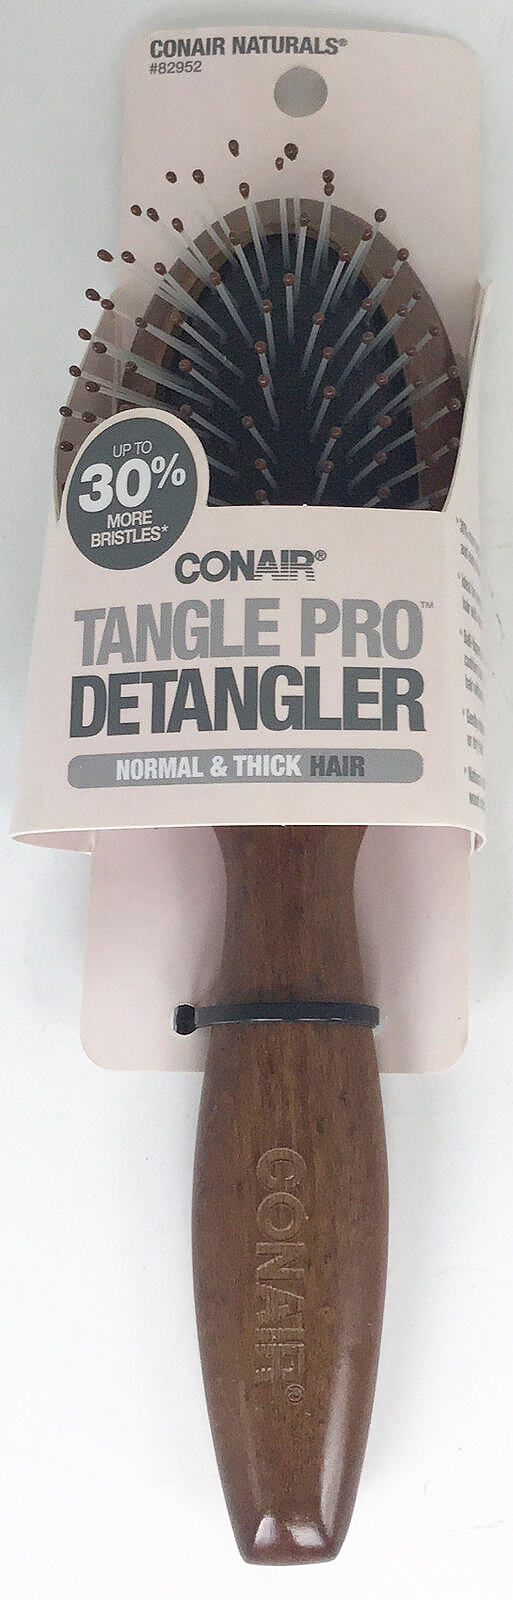 Conair Naturals Tangle Pro Detangler Oval Hair Brush - Click Image to Close